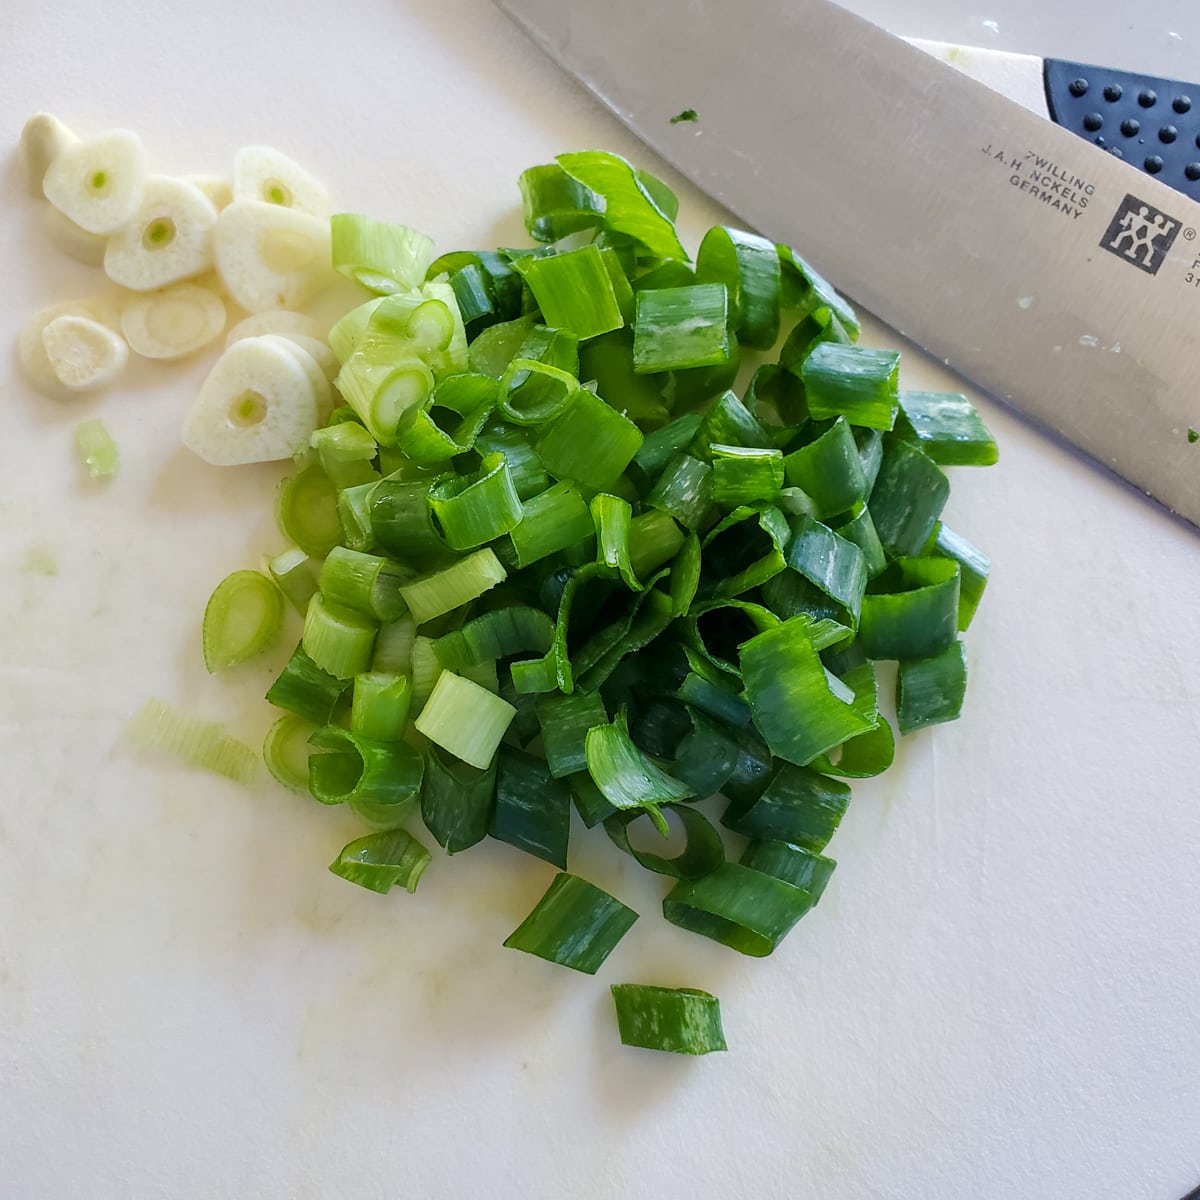 Chopped green onion and sliced garlic on a cutting board.